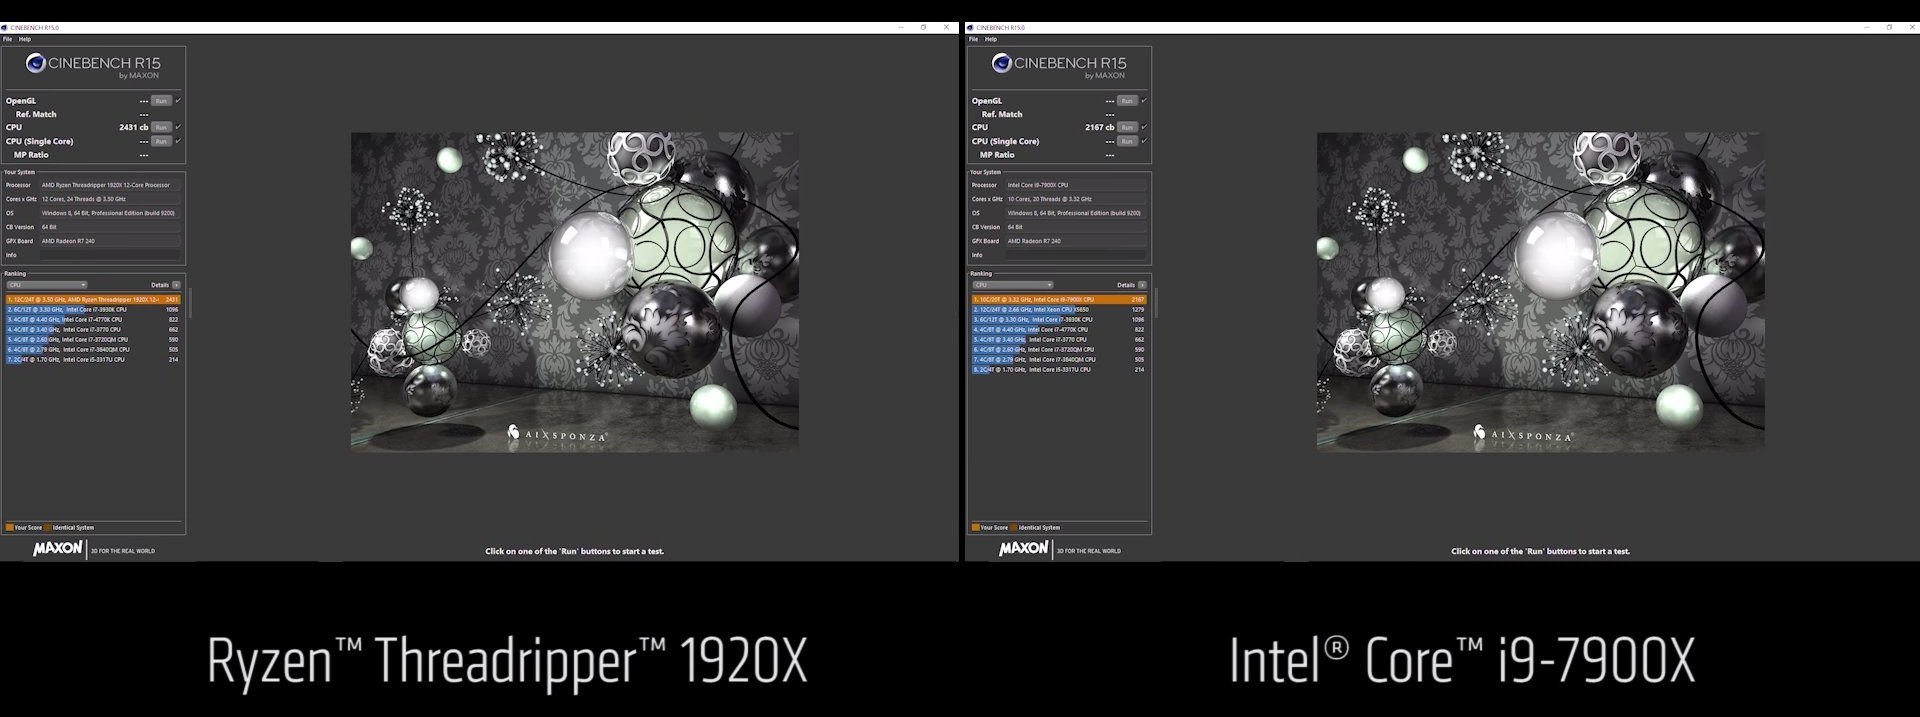 AMD-Ryzen-Threadripper-1920X-vs-Intel-Core-i9-7900X.jpg